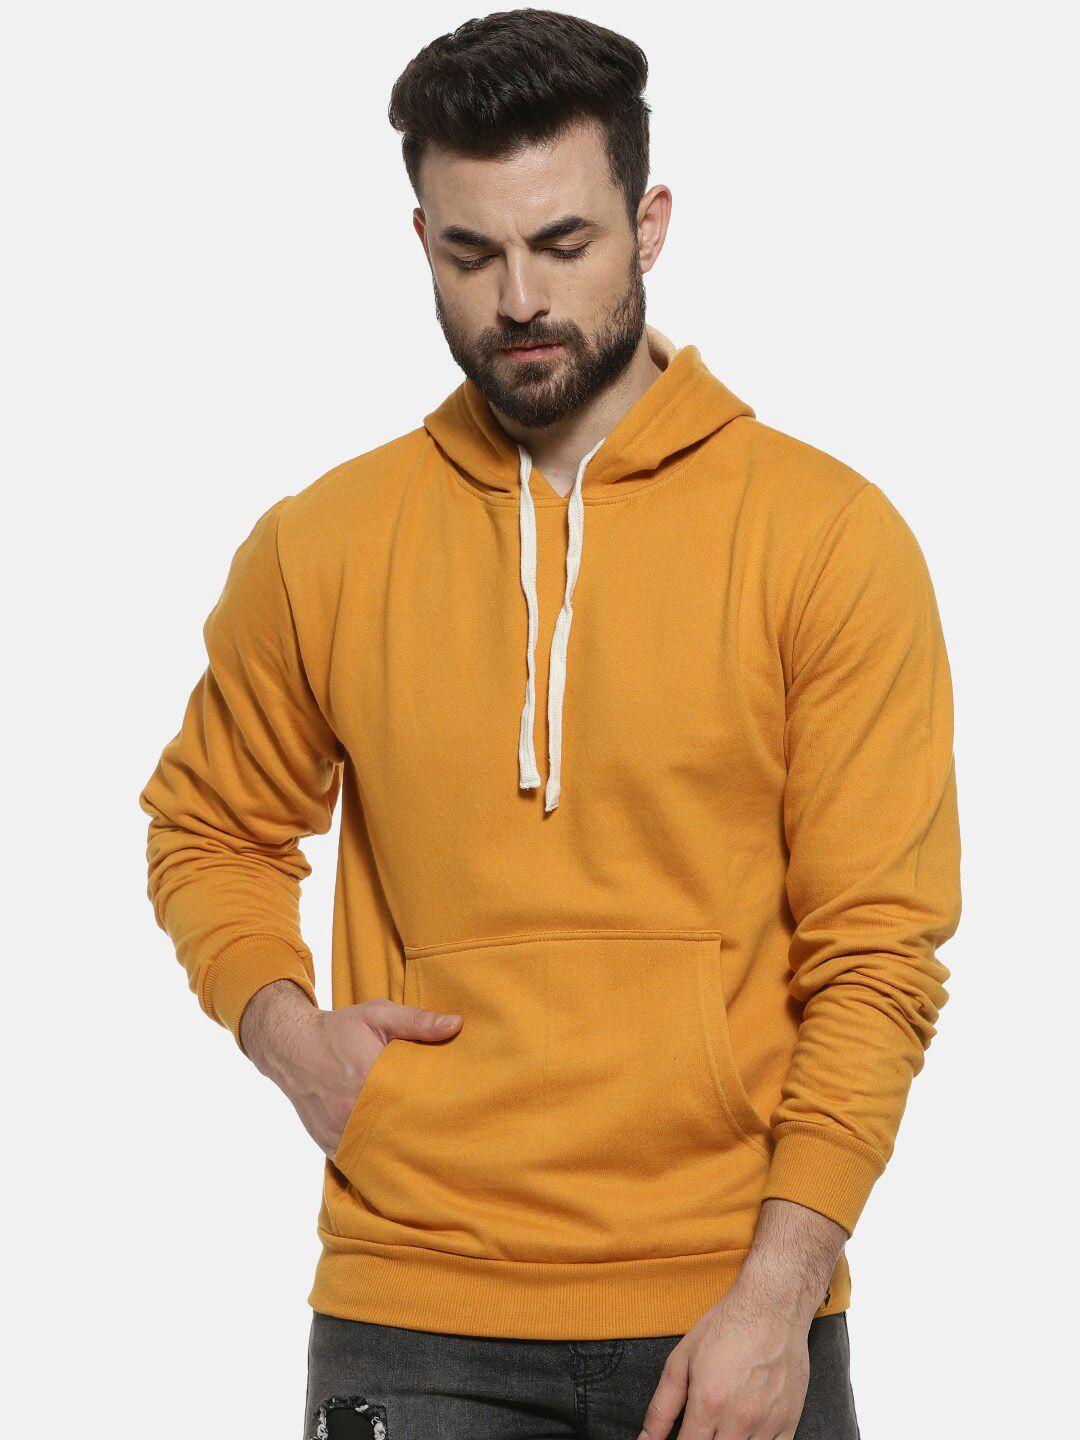 campus-sutra-men-mustard-hooded-sweatshirt